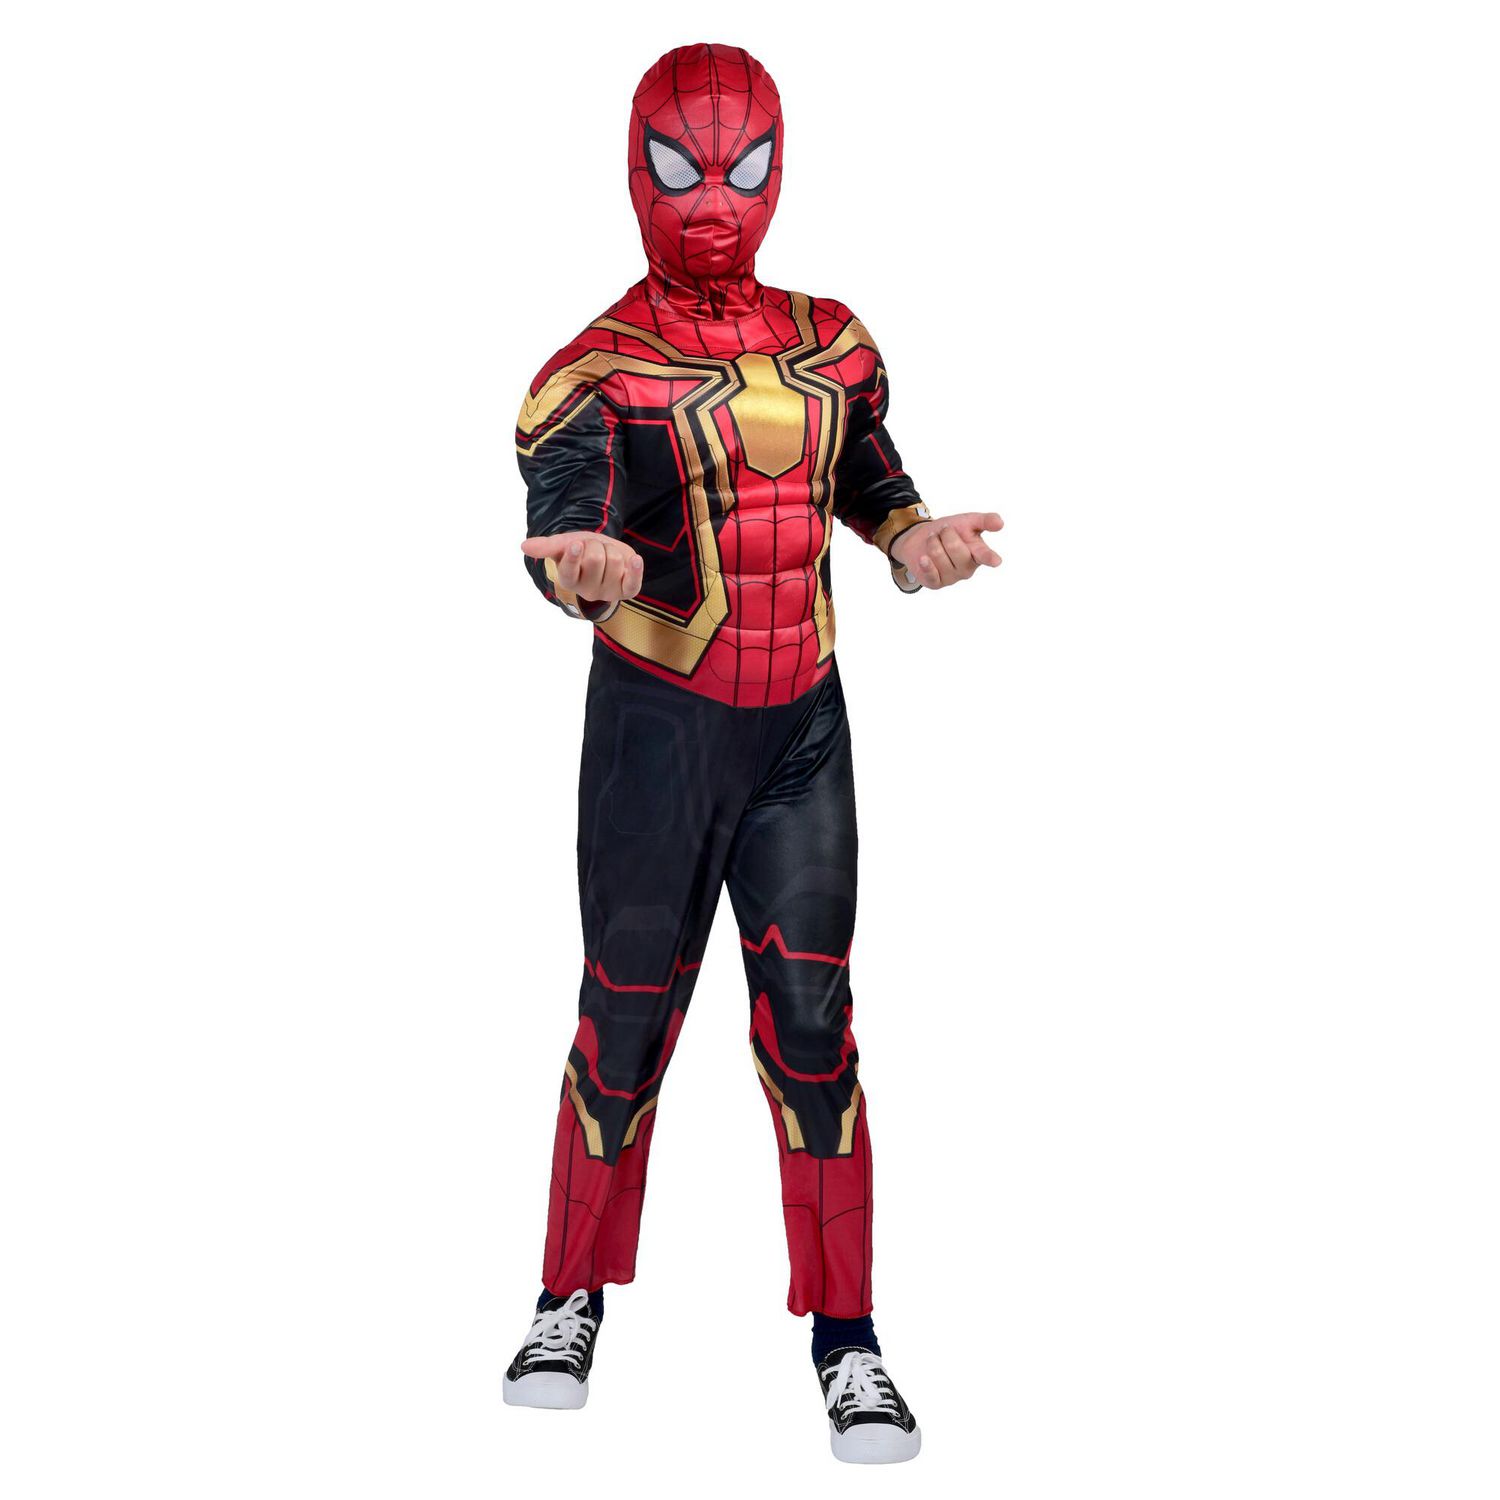 MARVEL'S SPIDER-MAN QUALUX COSTUME (ADULTE) - Combinaison en jersey de  polyester farcie de polyfill et masque en tissu 